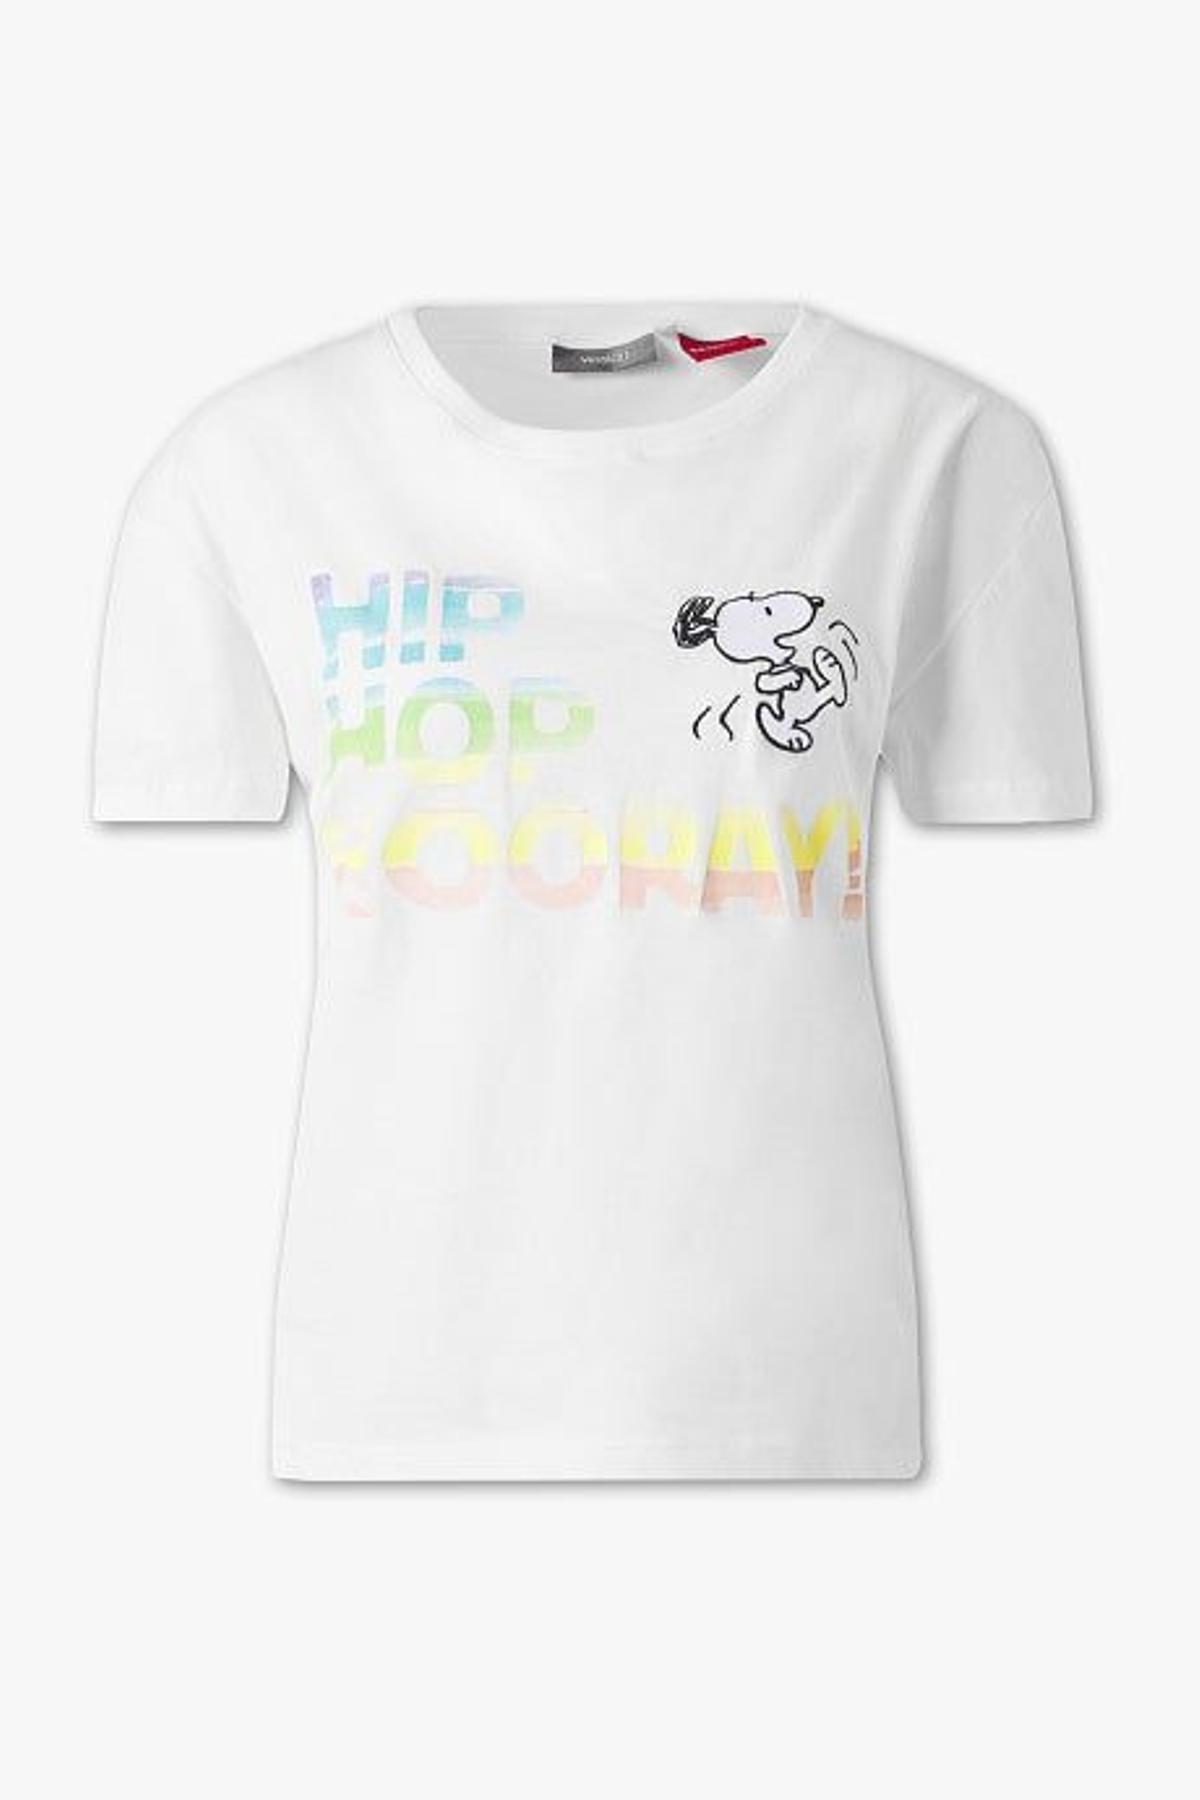 Camiseta Snoopy (Precio: 9,90 euros)